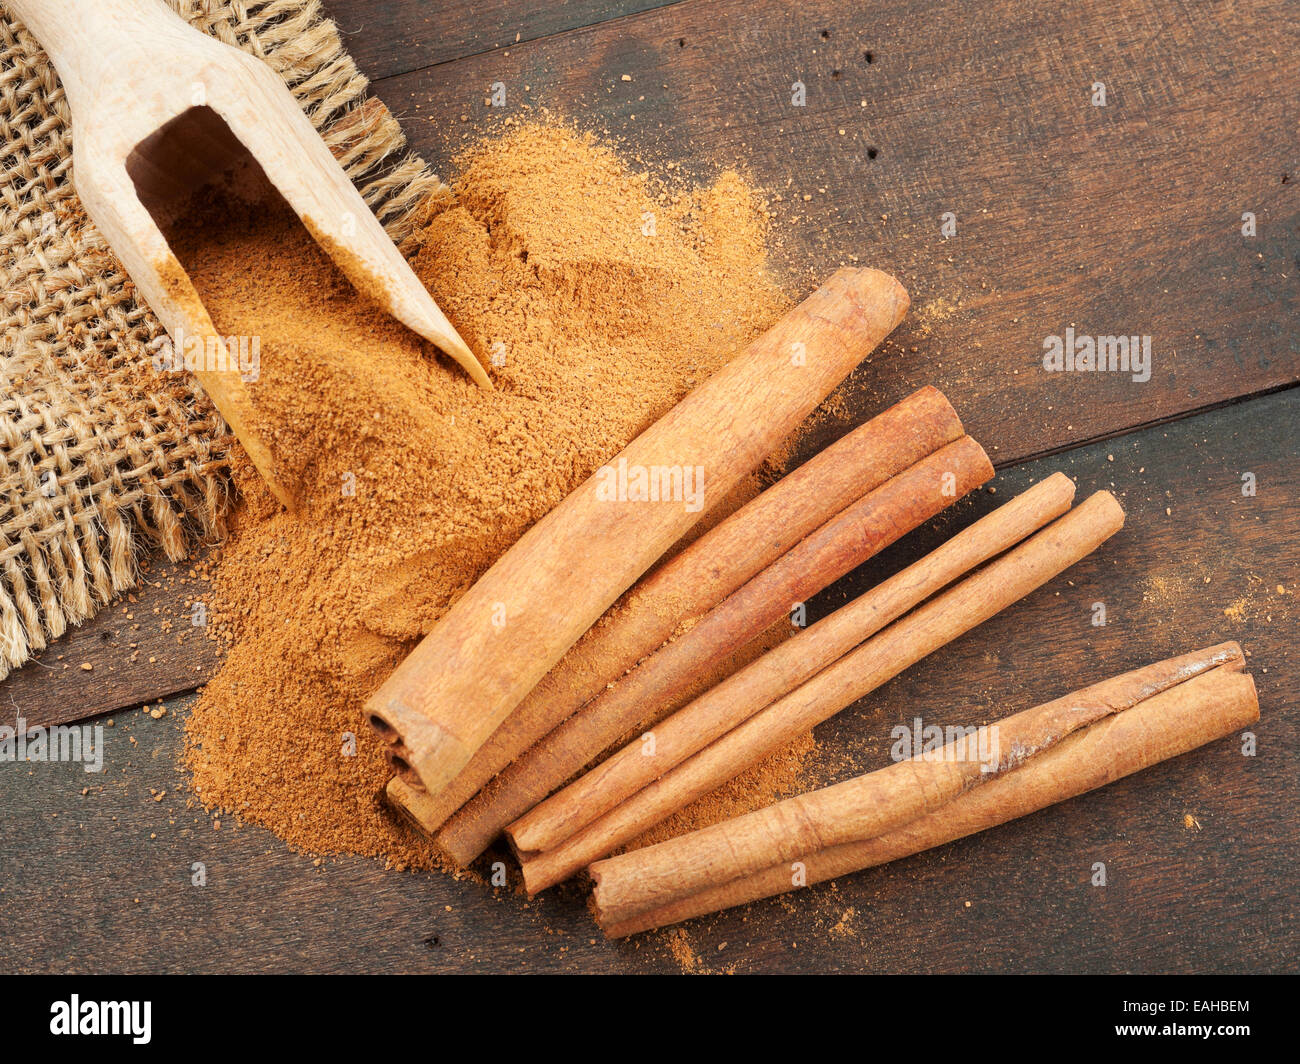 Cinnamon sticks and cinnamon powder in wooden scoop Stock Photo